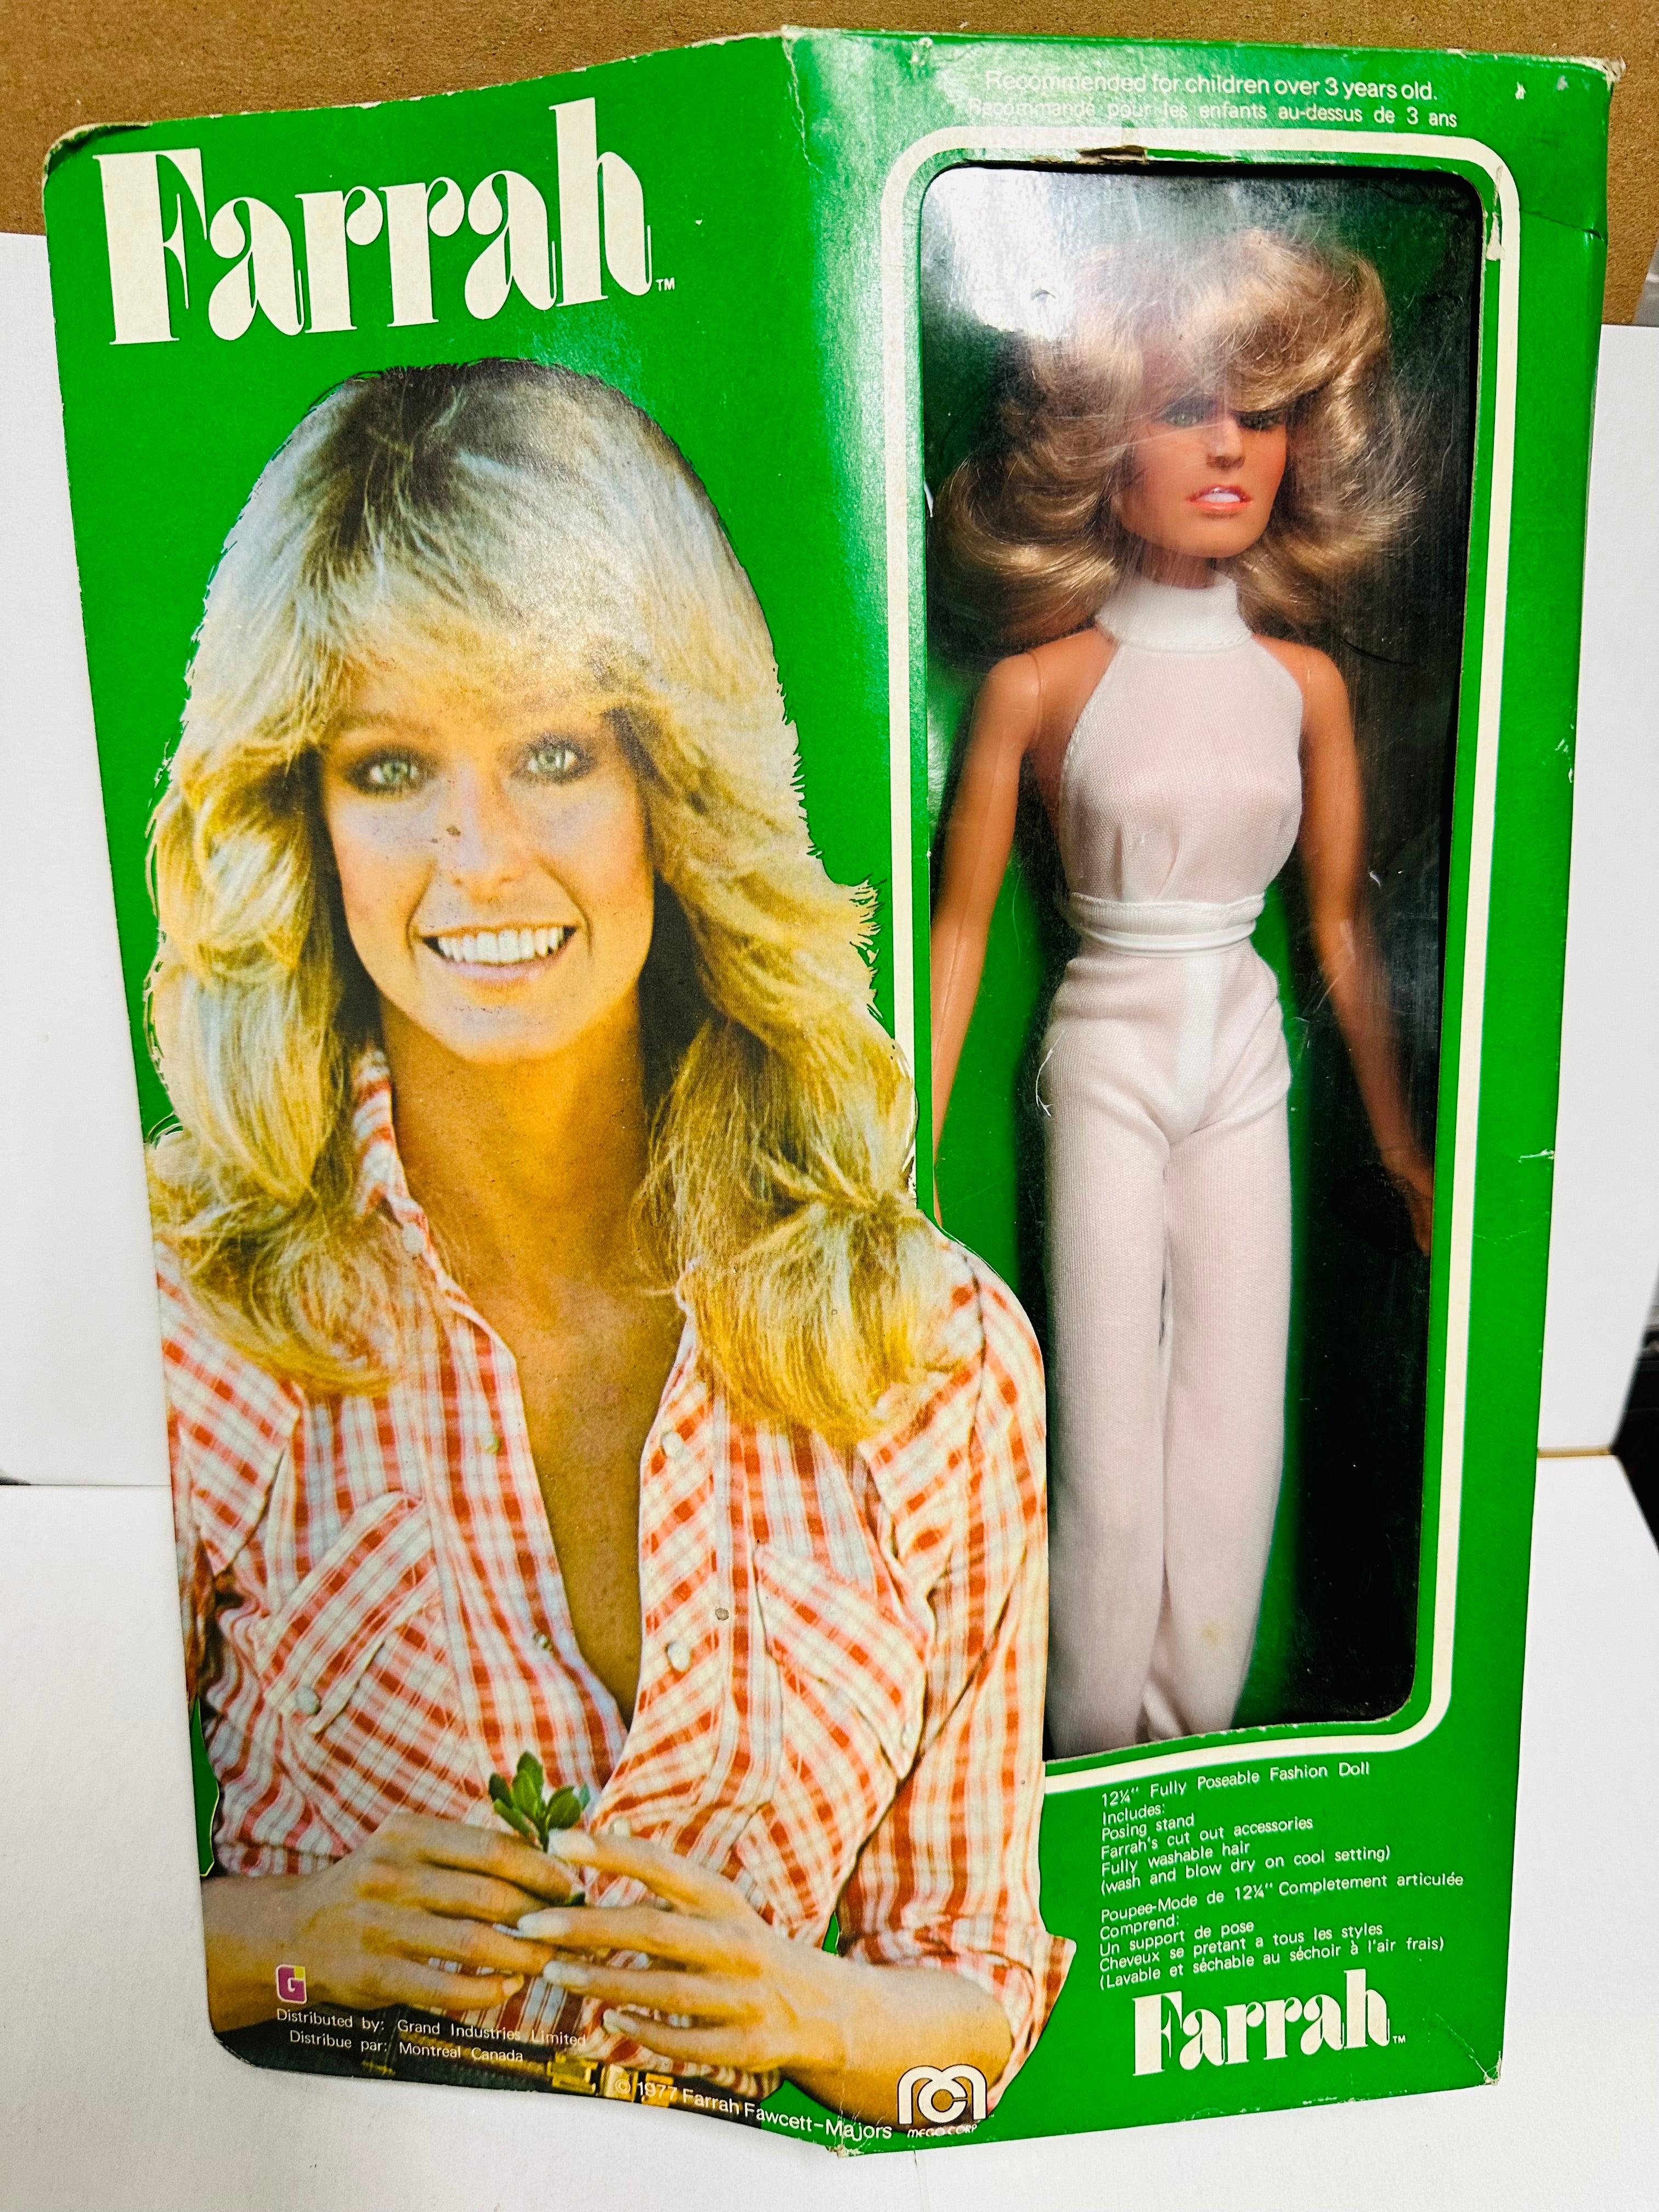 Farrah Fawcett, rare toy figure in Box, 1977